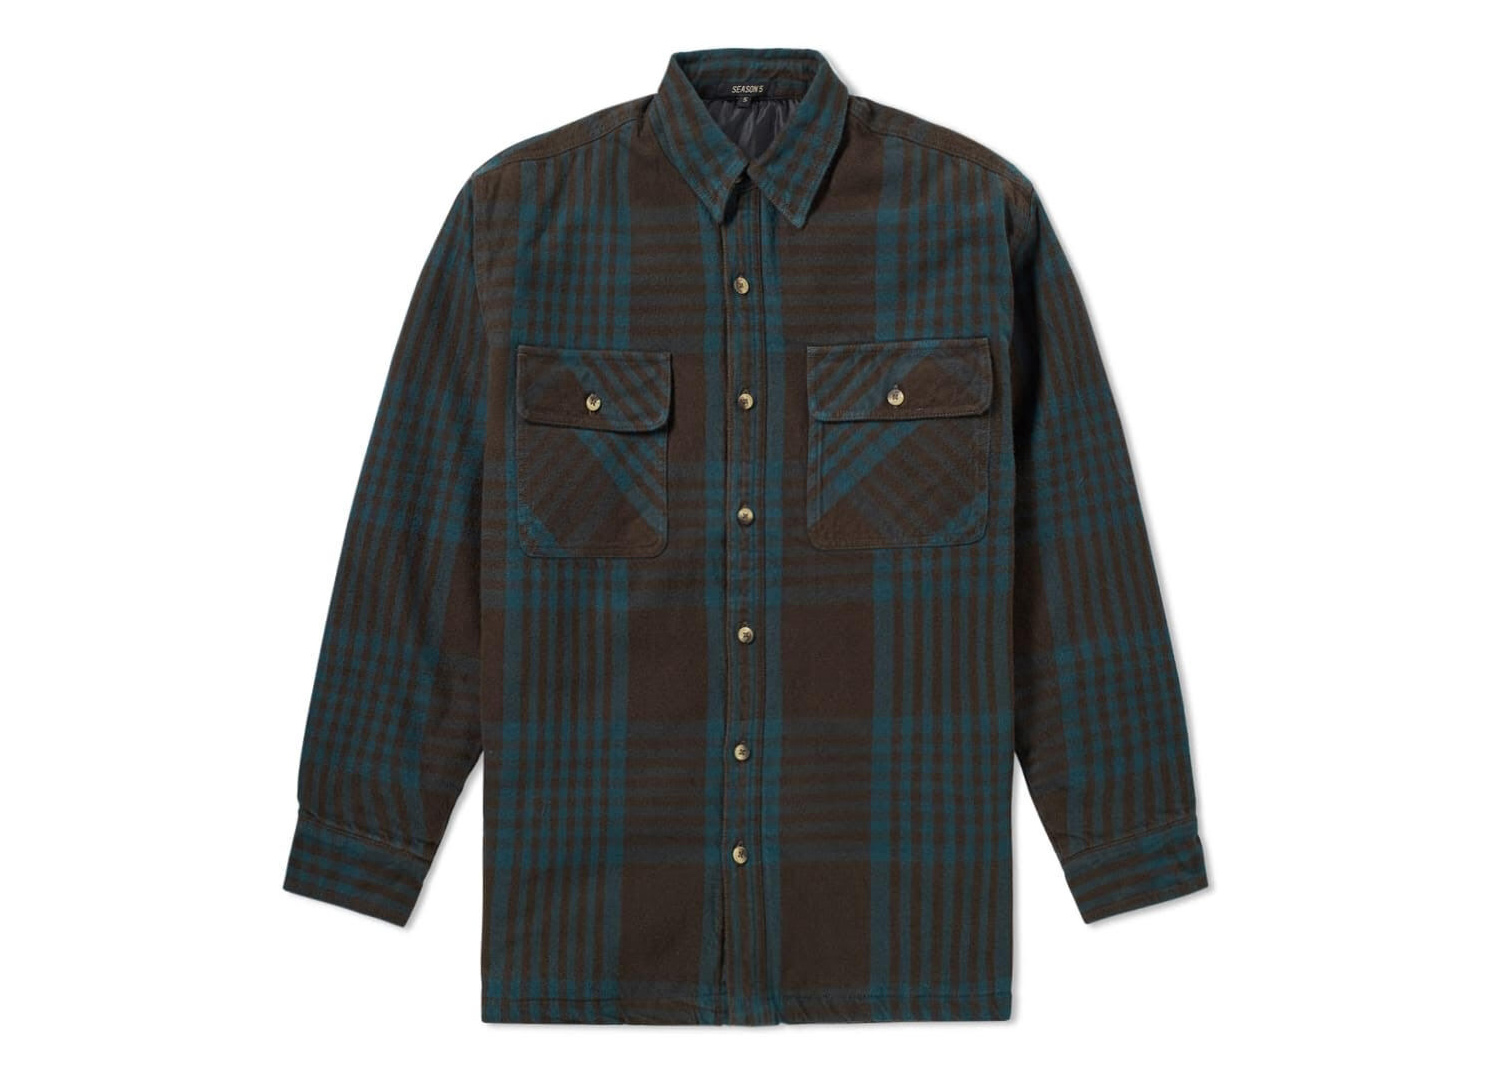 YEEZY SEASON 5 Classic Flannel shirt ネル